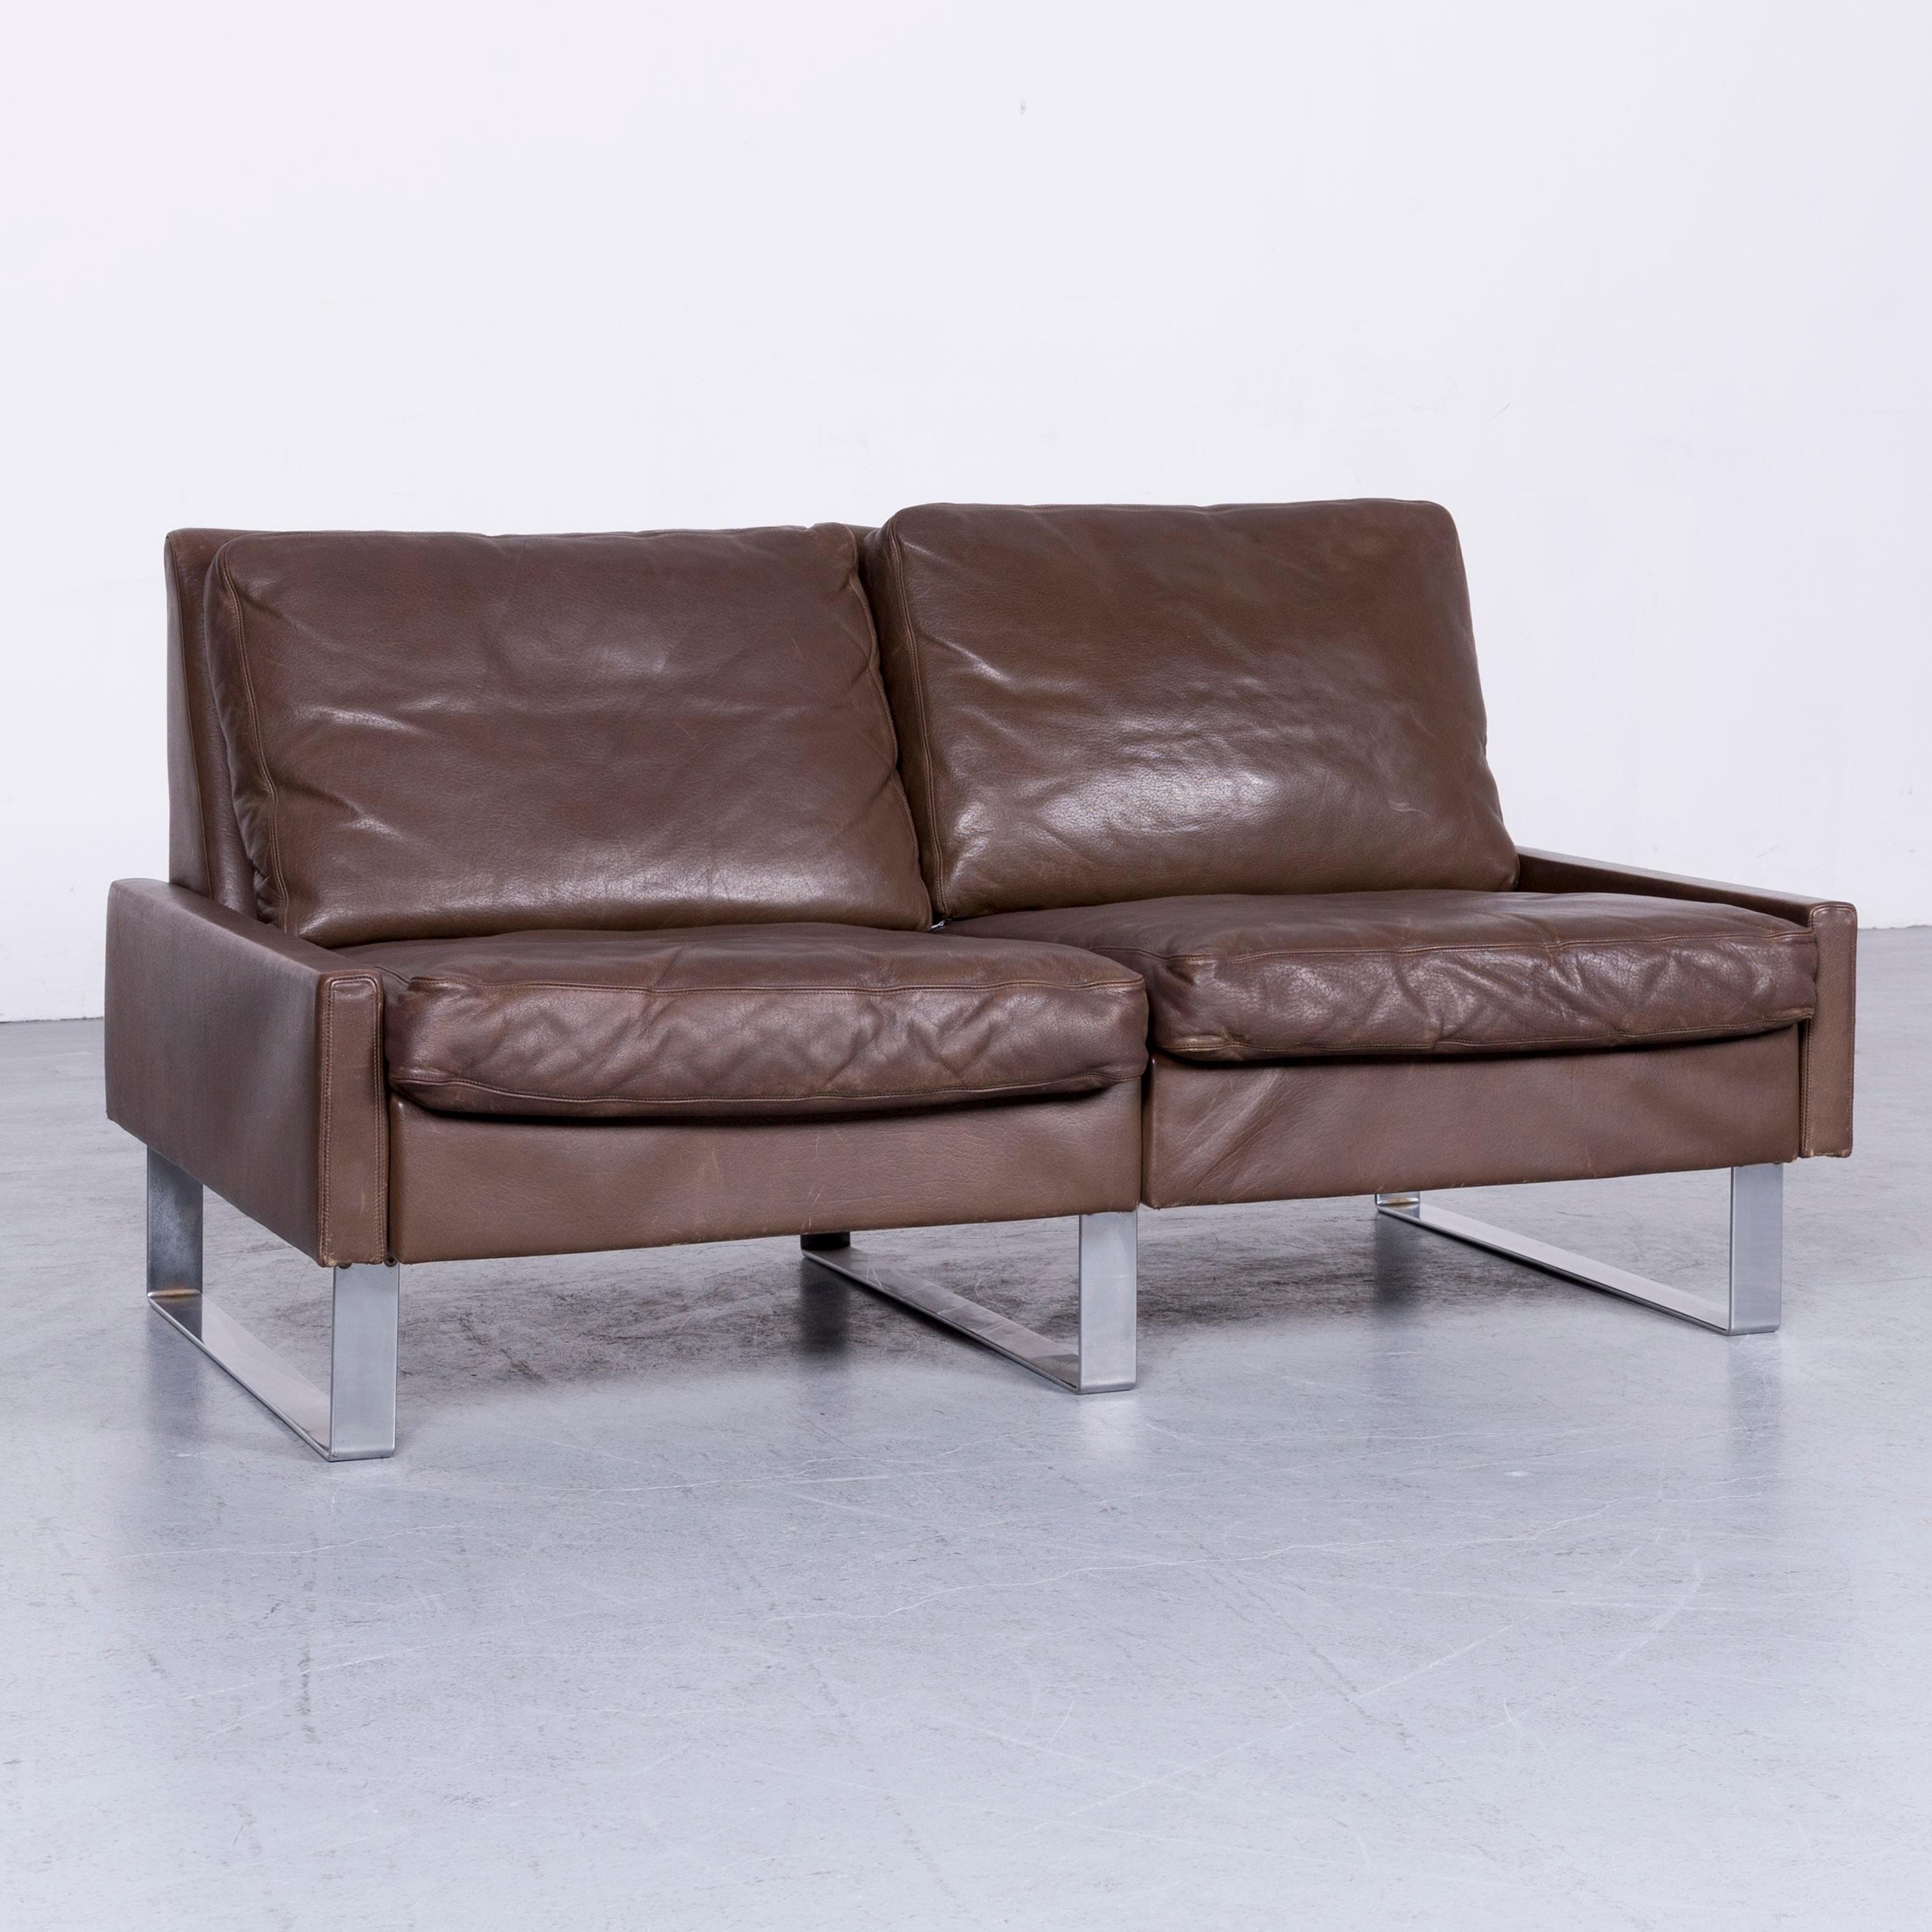 We bring to you an Cor Conseta leather sofa brown anilin-leather three-seat.




















